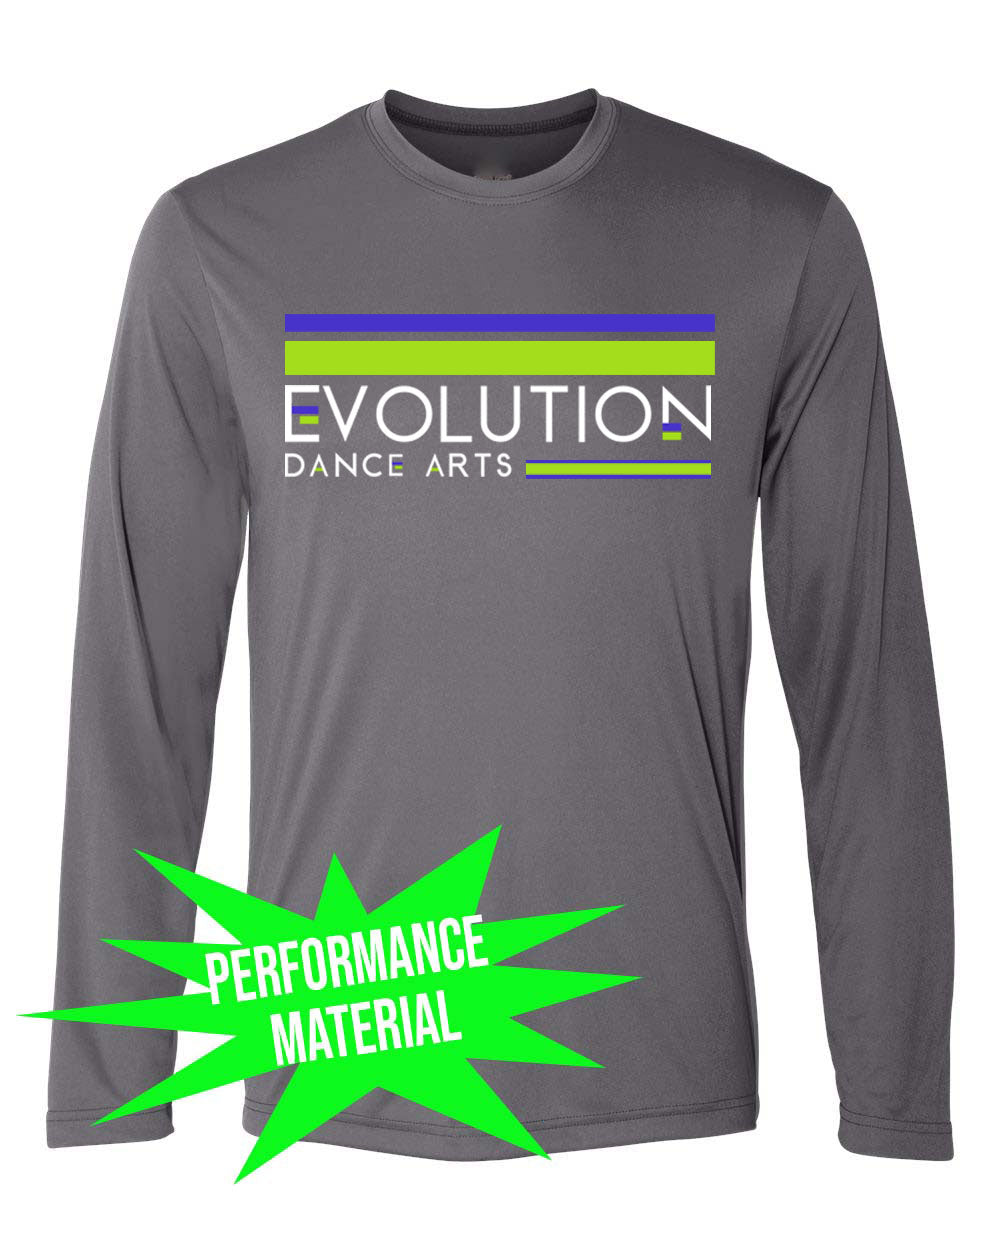 Evolution Dance Arts Performance Material Design 3 Long Sleeve Shirt